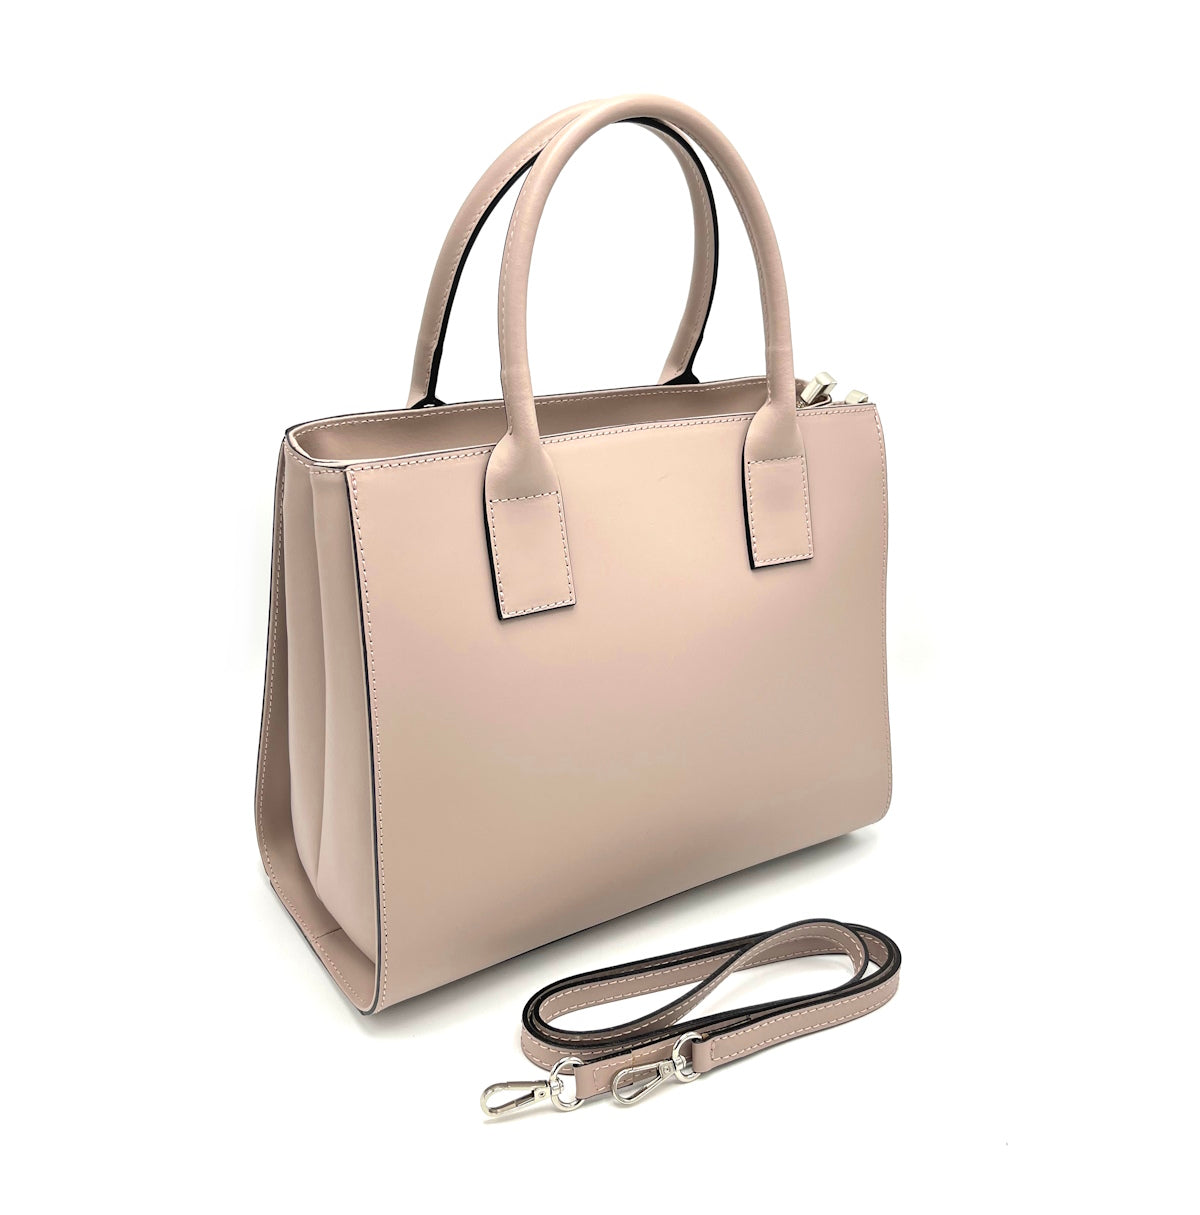 Genuine leather handbag, Made in Italy, art. 112472